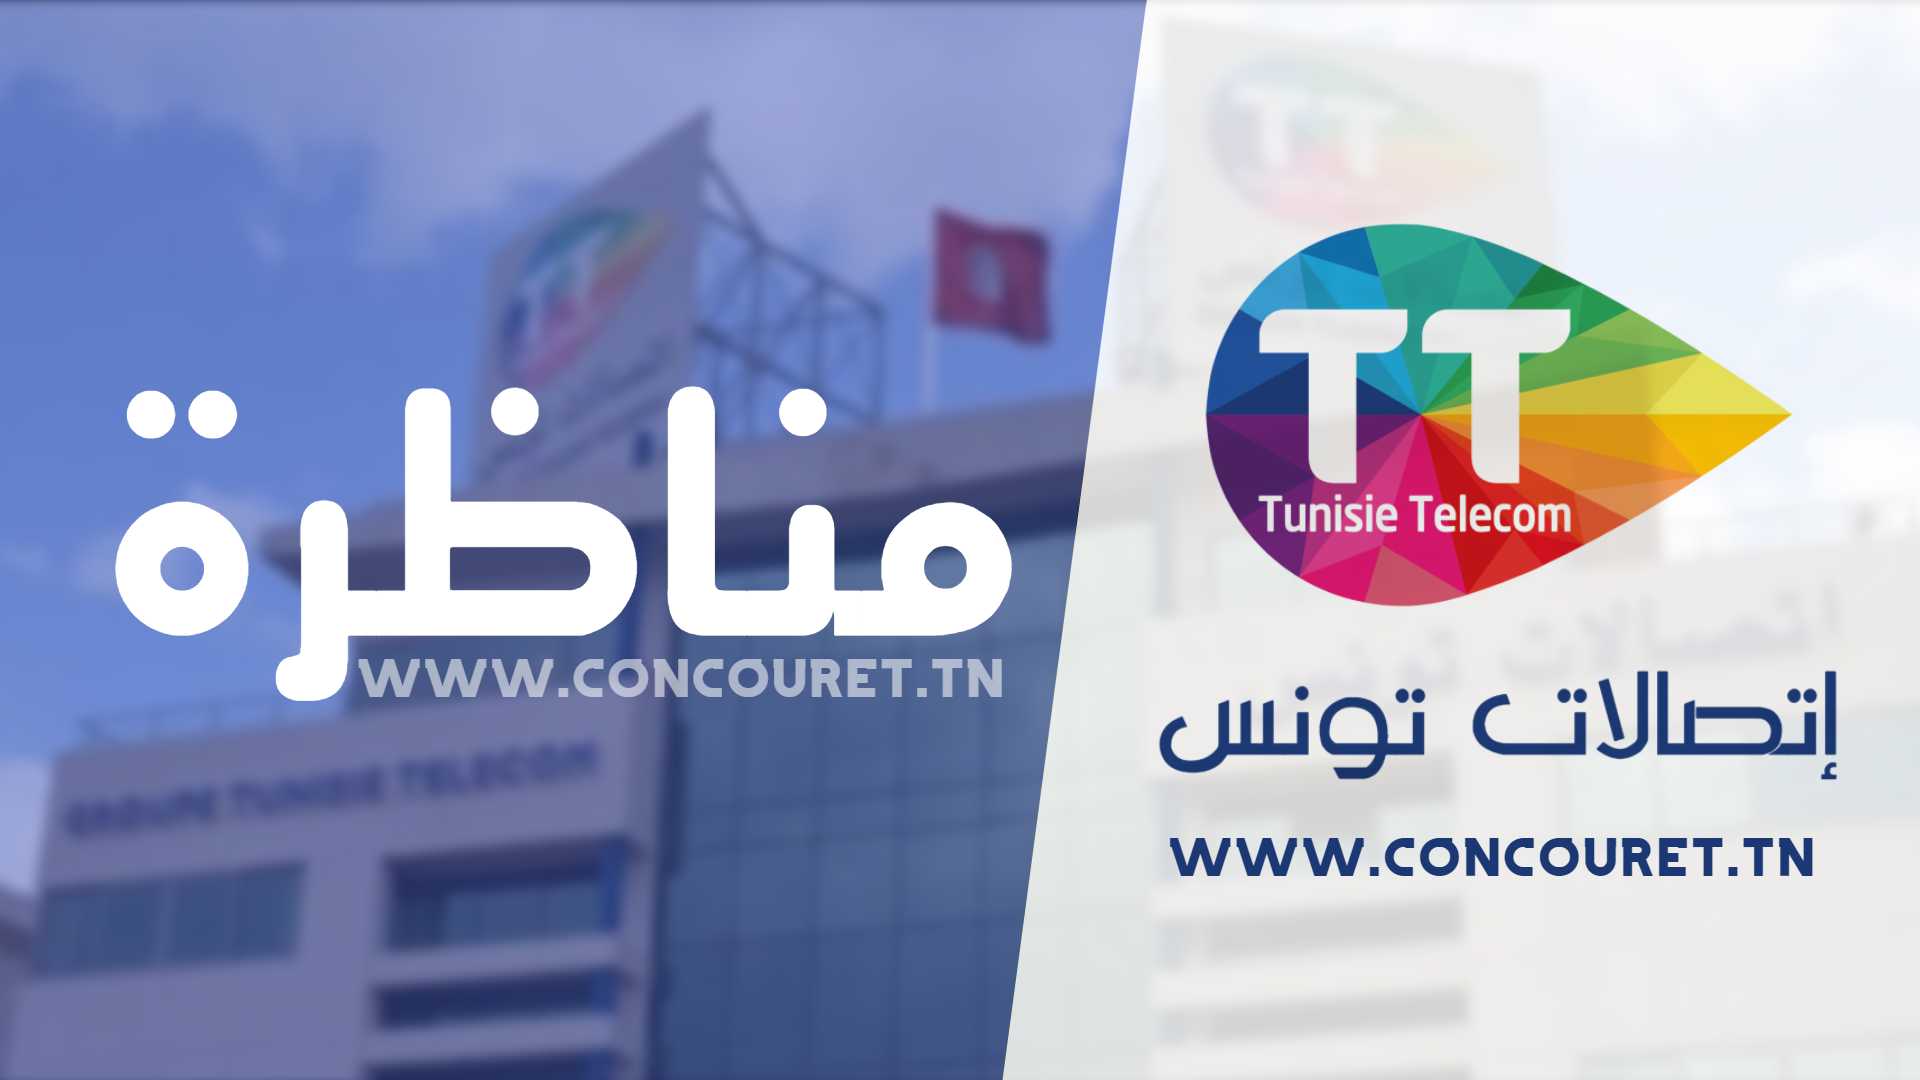 open vpn tunisie telecom concours